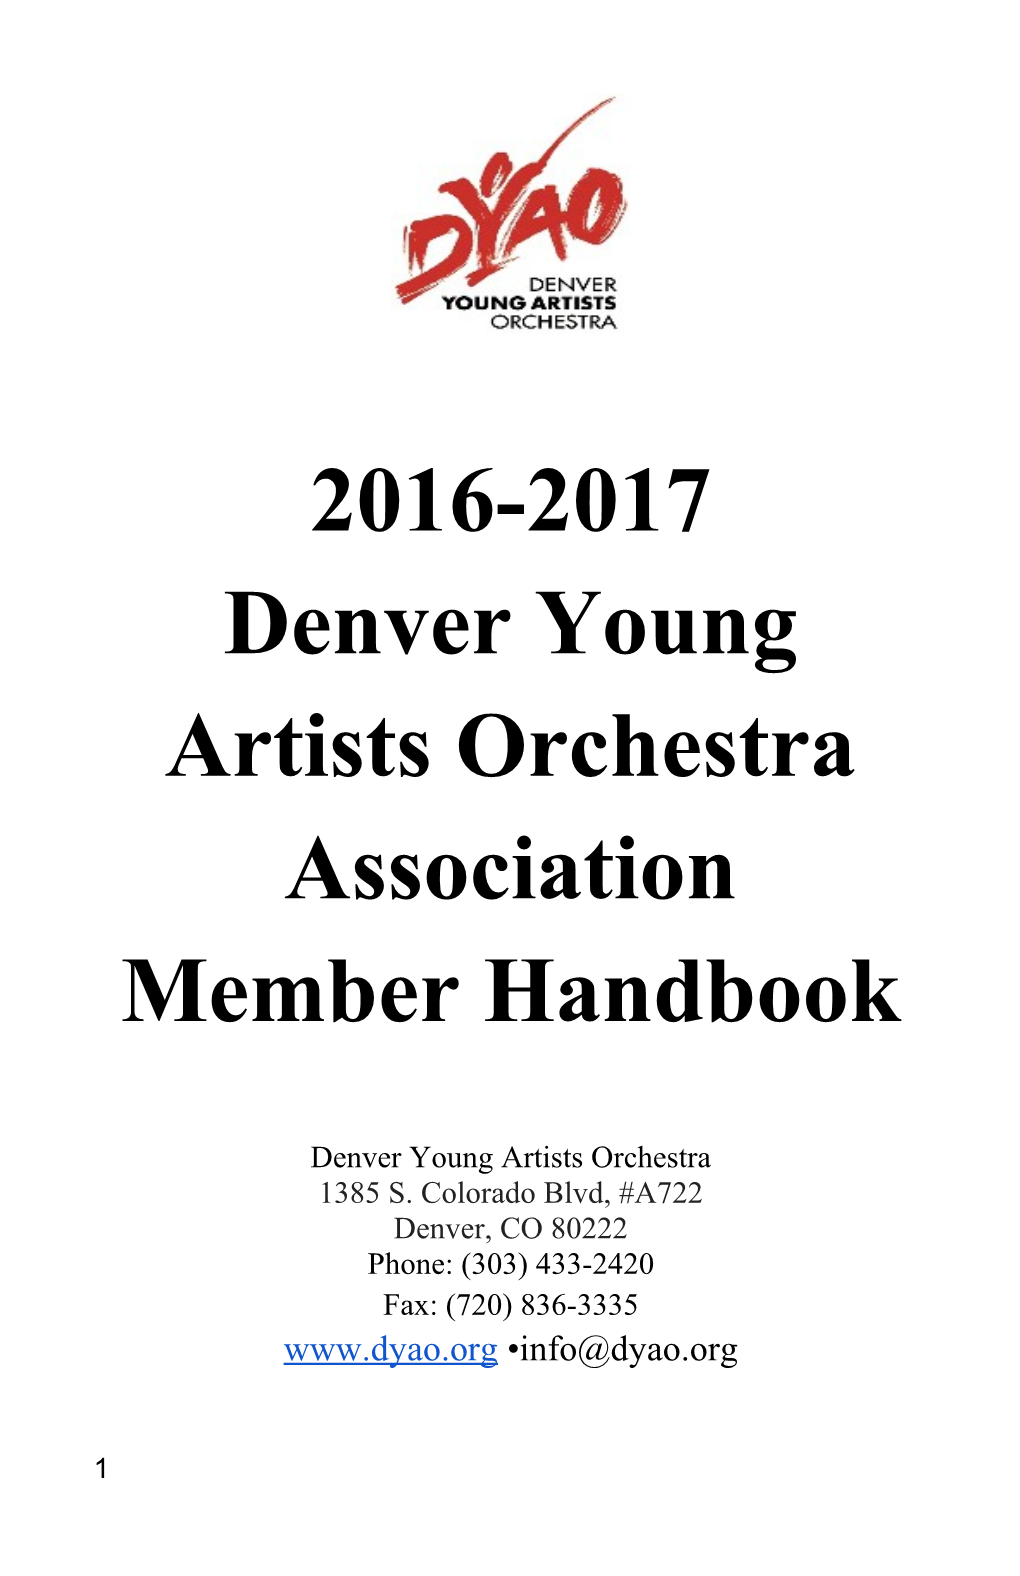 Denver Young Artists Orchestra Association